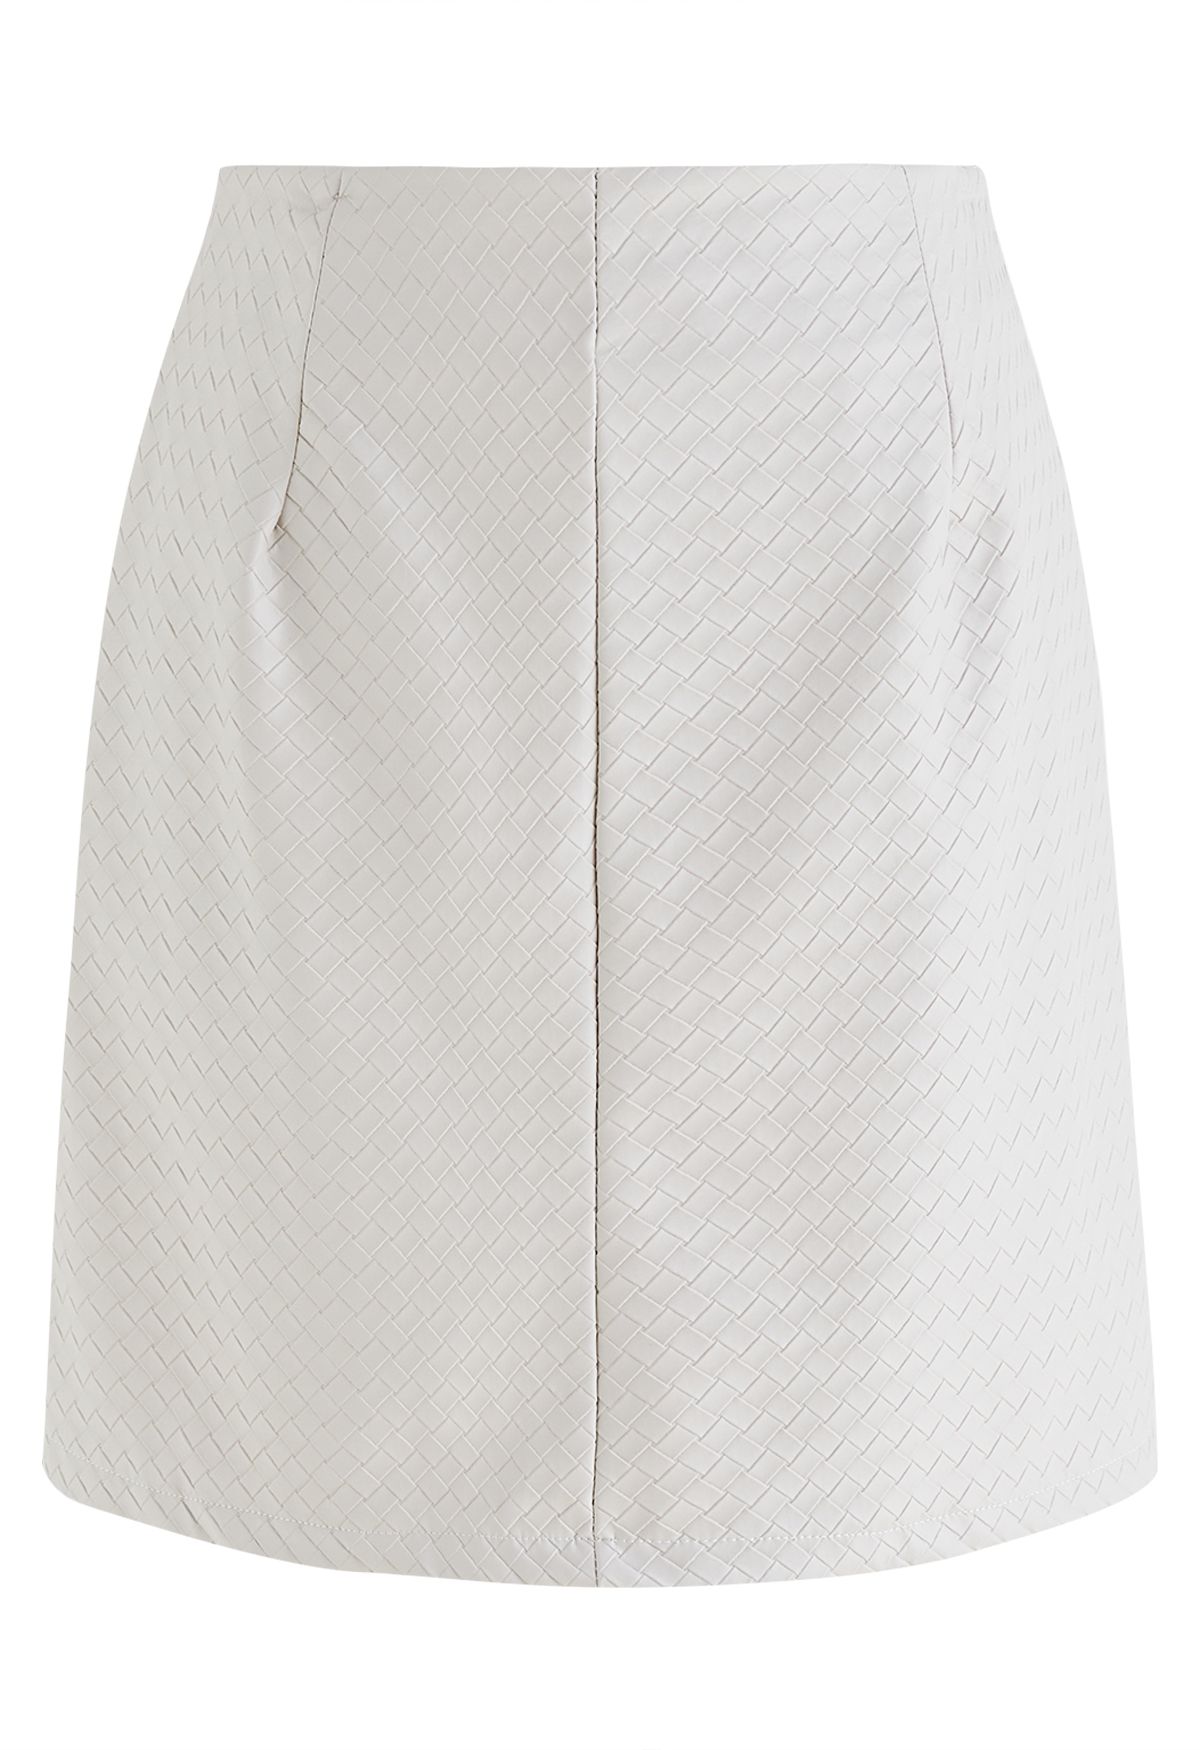 Woven Pattern Faux Leather Mini Skirt